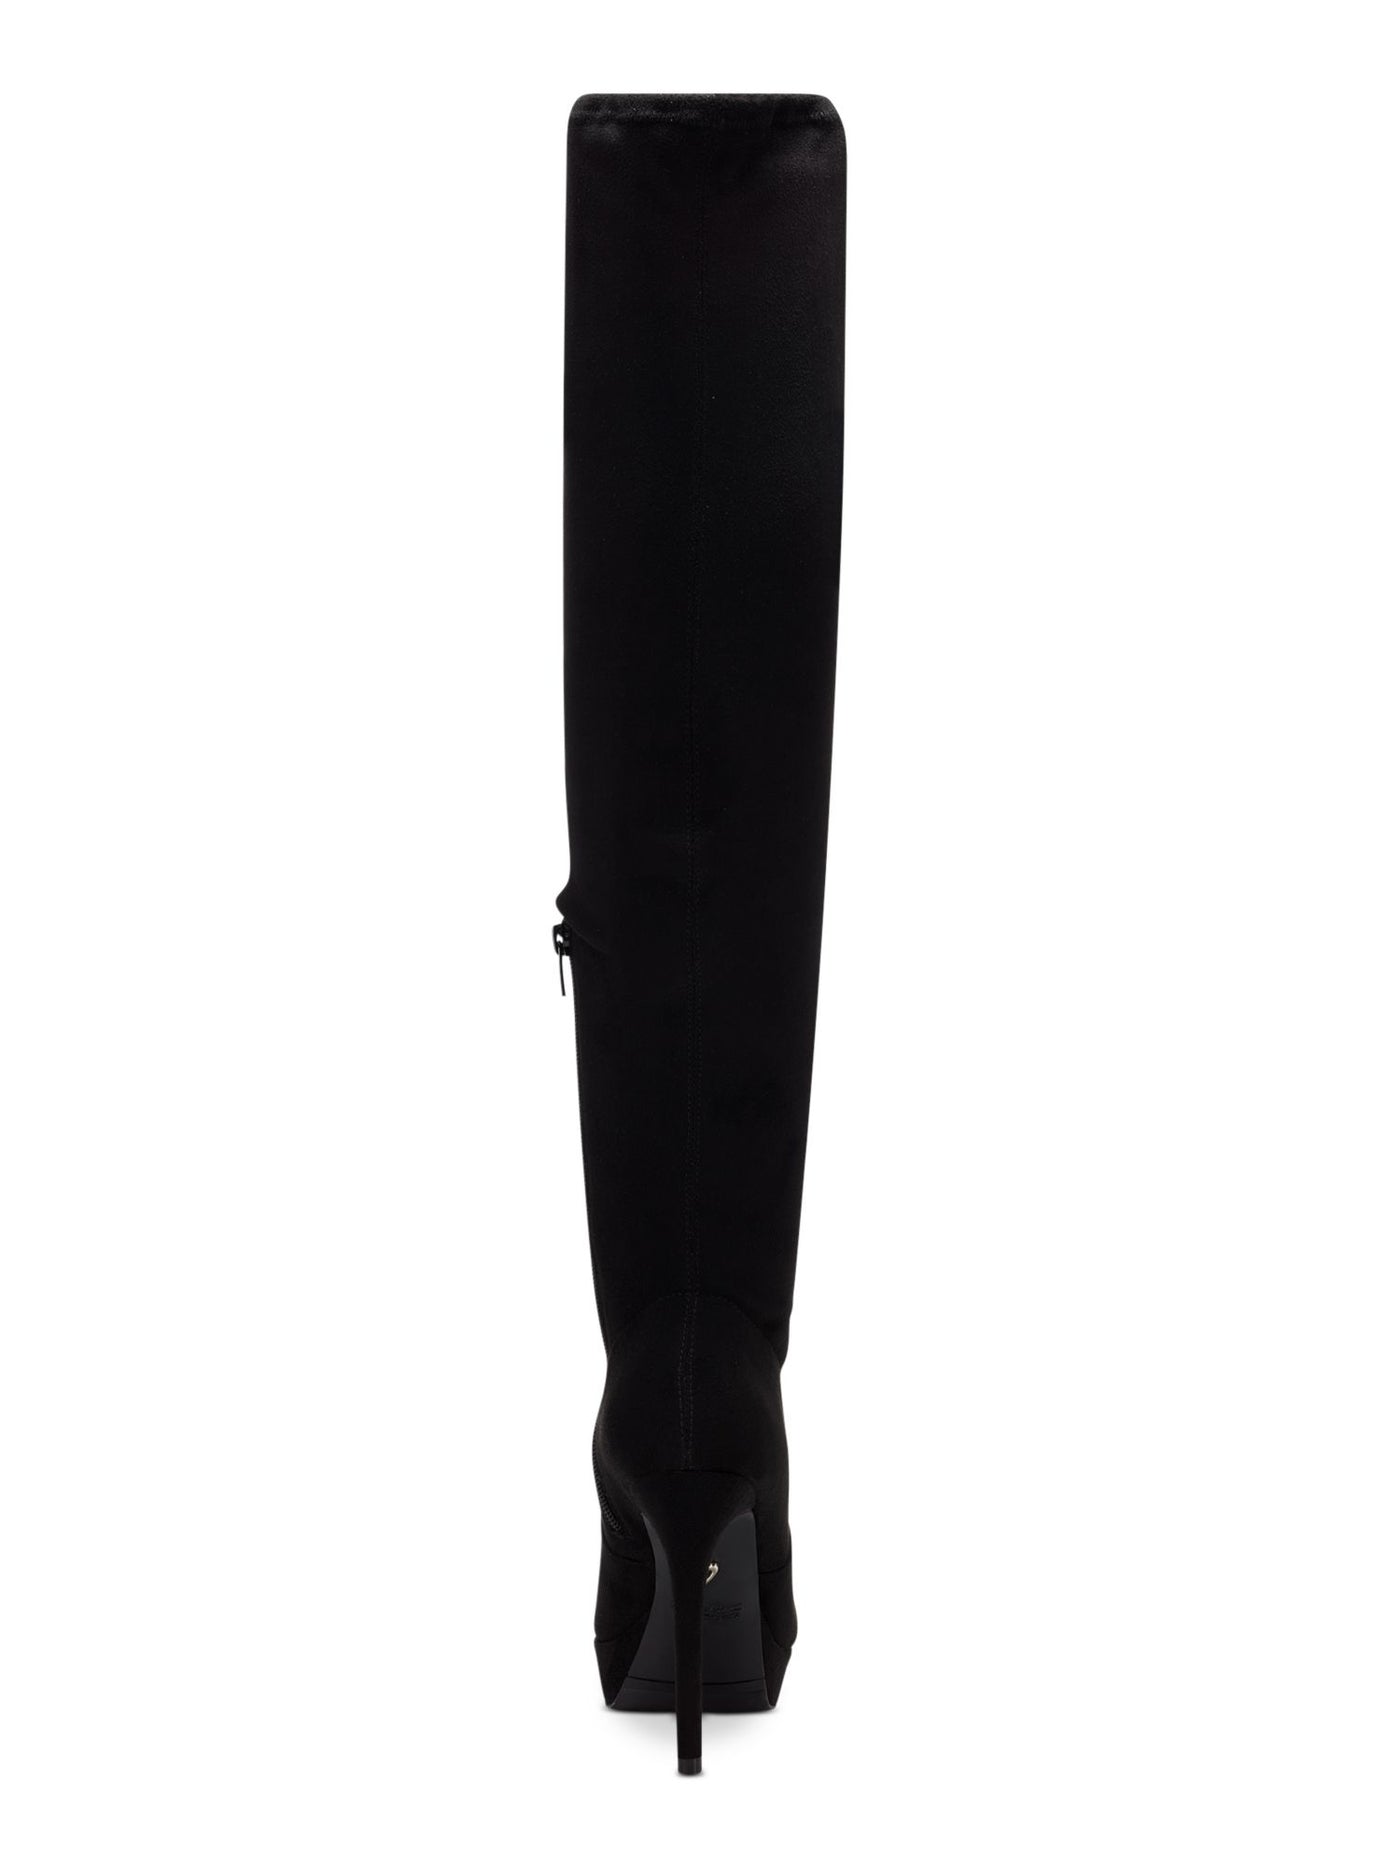 THALIA SODI Womens Black 1" Platform Clarissa Almond Toe Stiletto Zip-Up Dress Boots 5 M